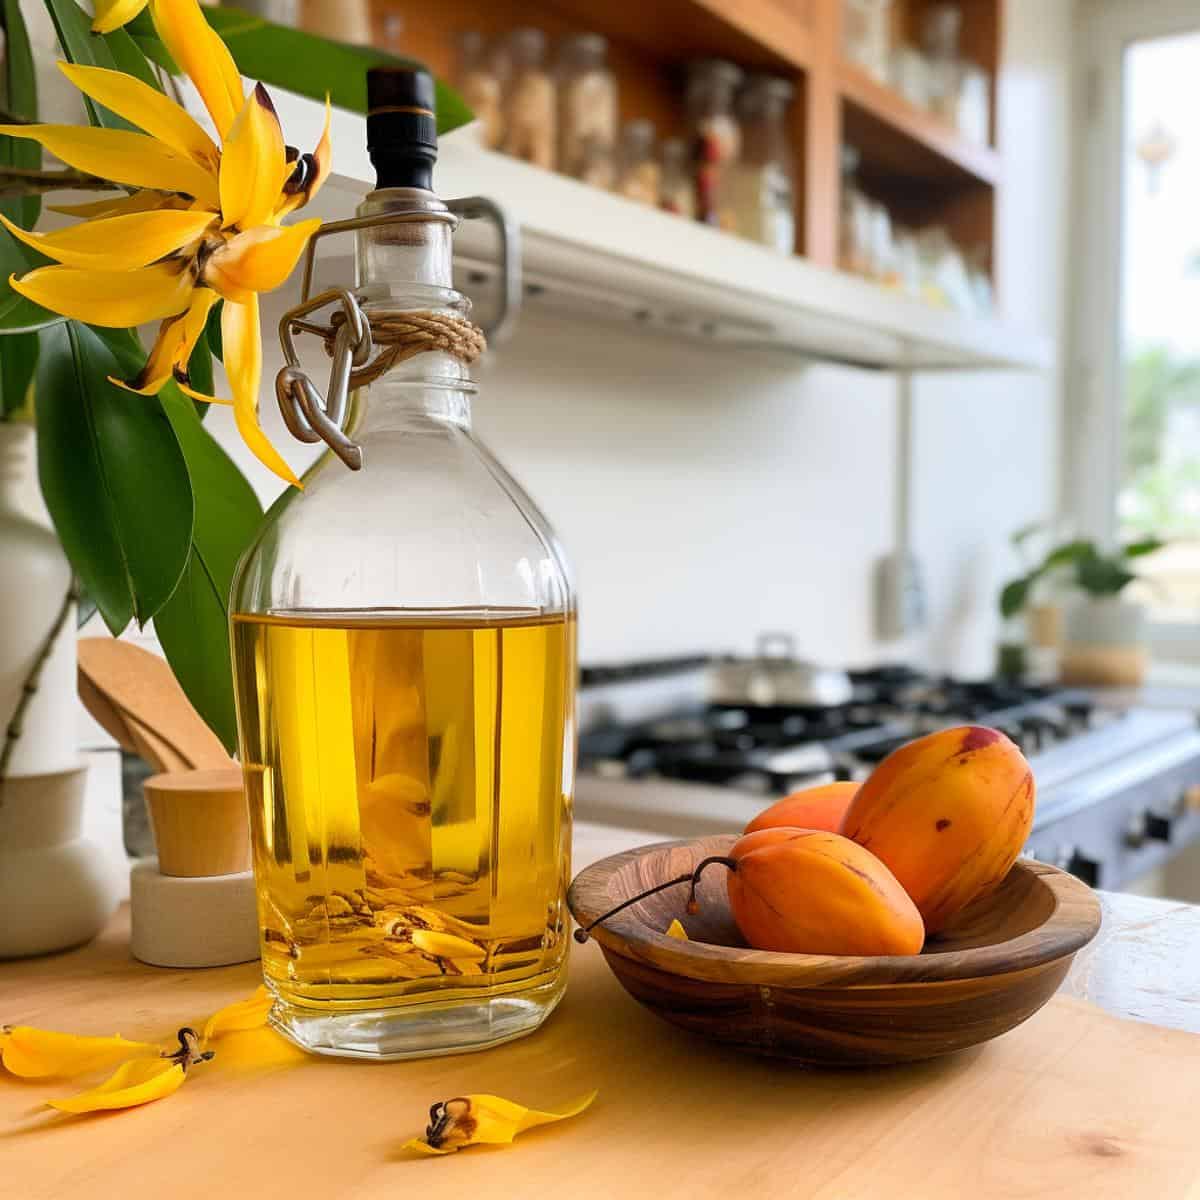 Dika Oil on a kitchen counter